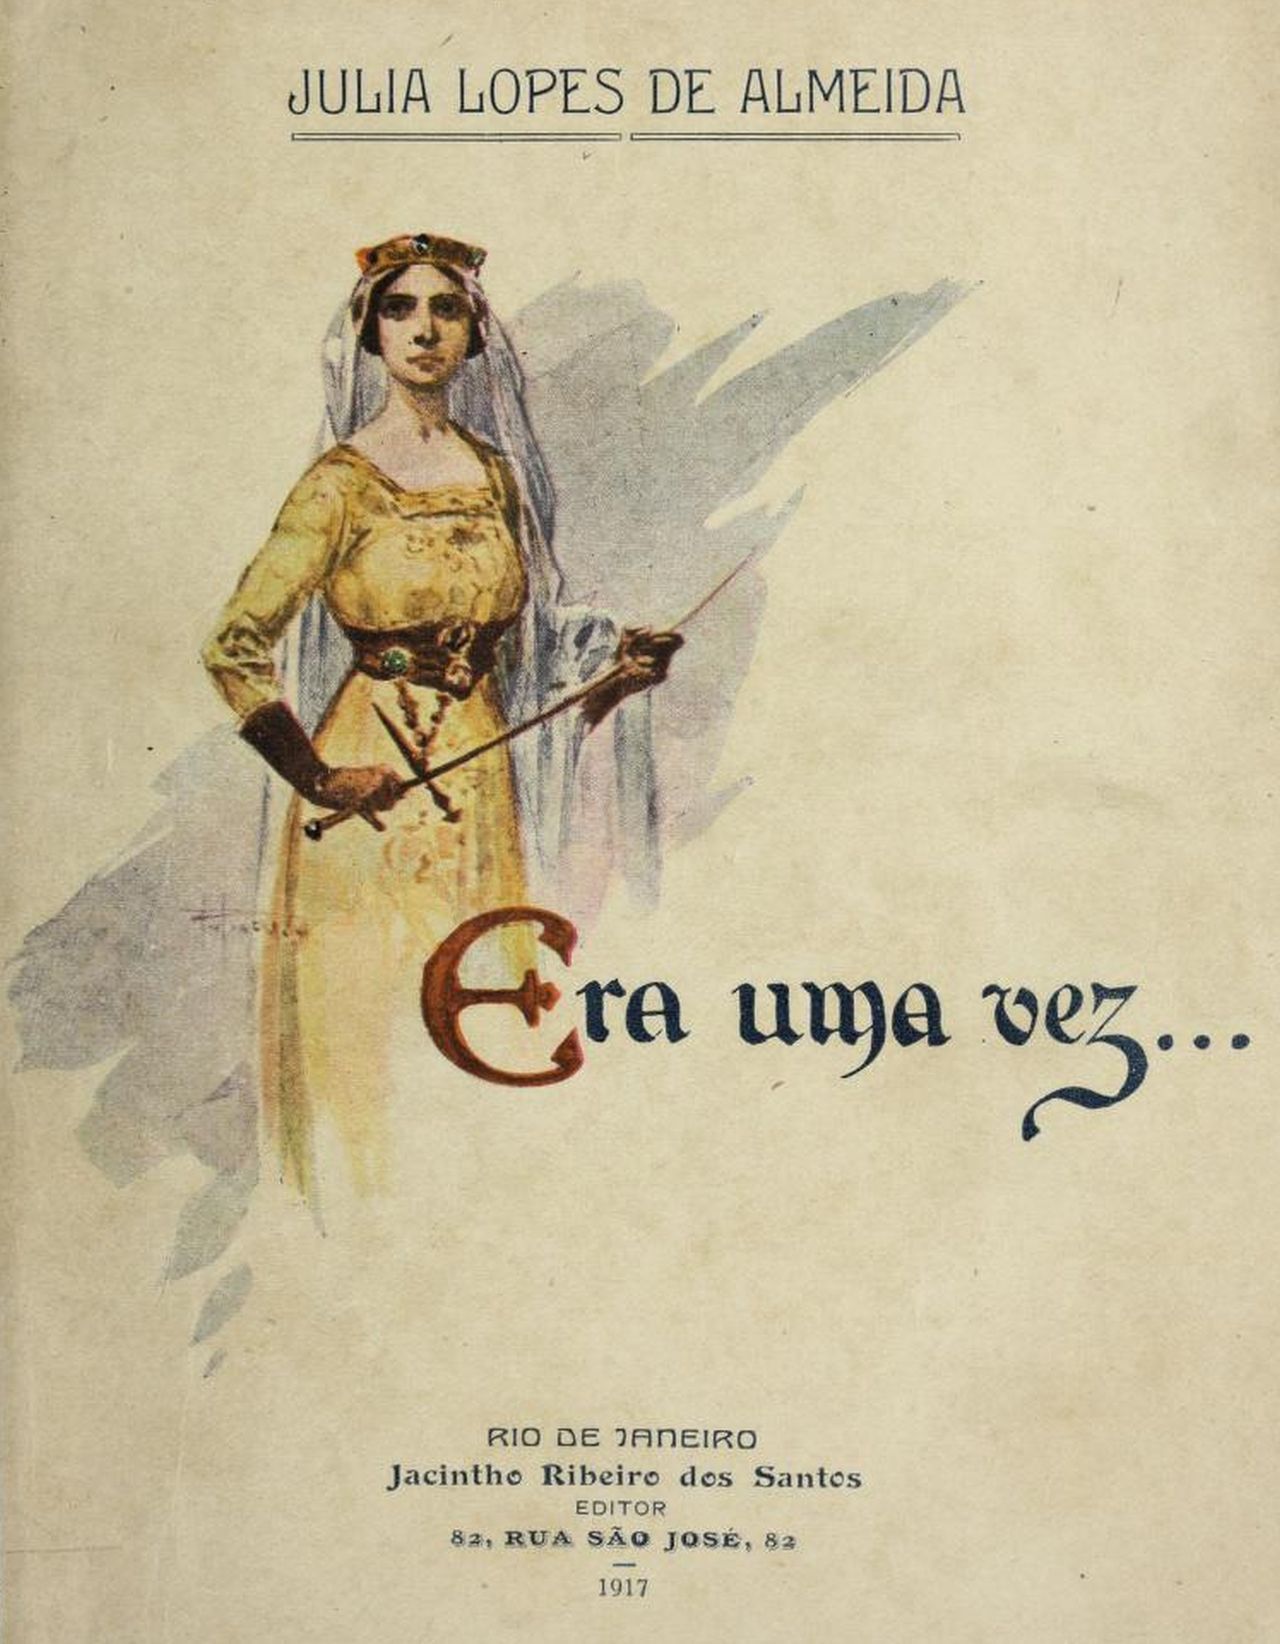 The Project Gutenberg eBook of Era uma vez, by Júlia Lopes de Almeida.